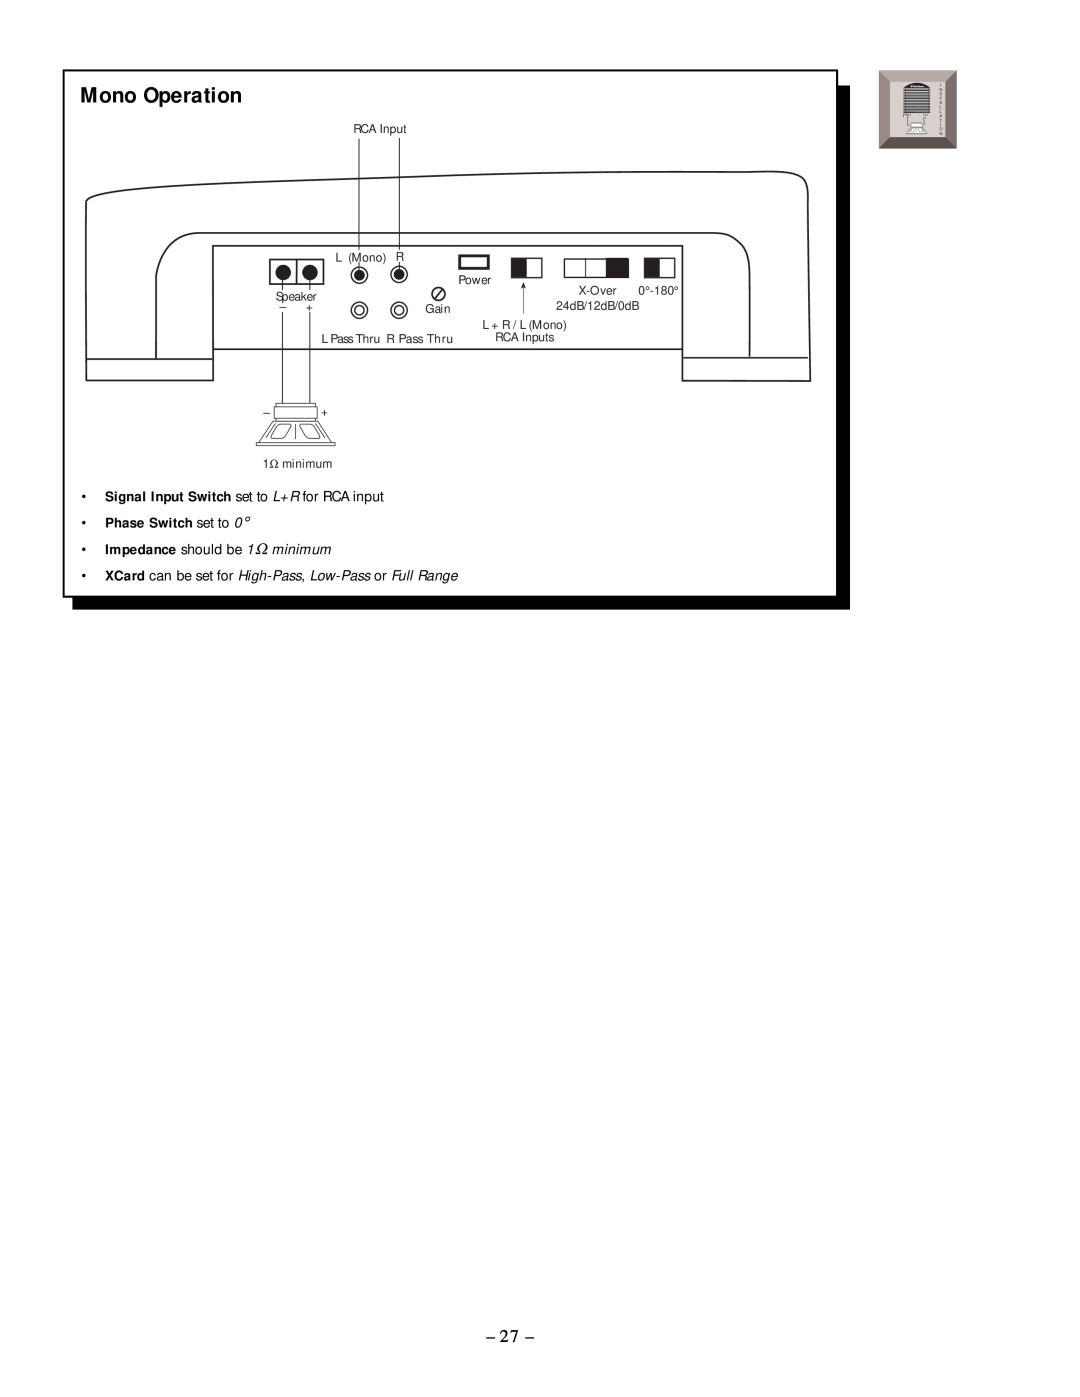 Rockford Fosgate 50.2, 50.1 manual Mono Operation, Phase Switch set to 